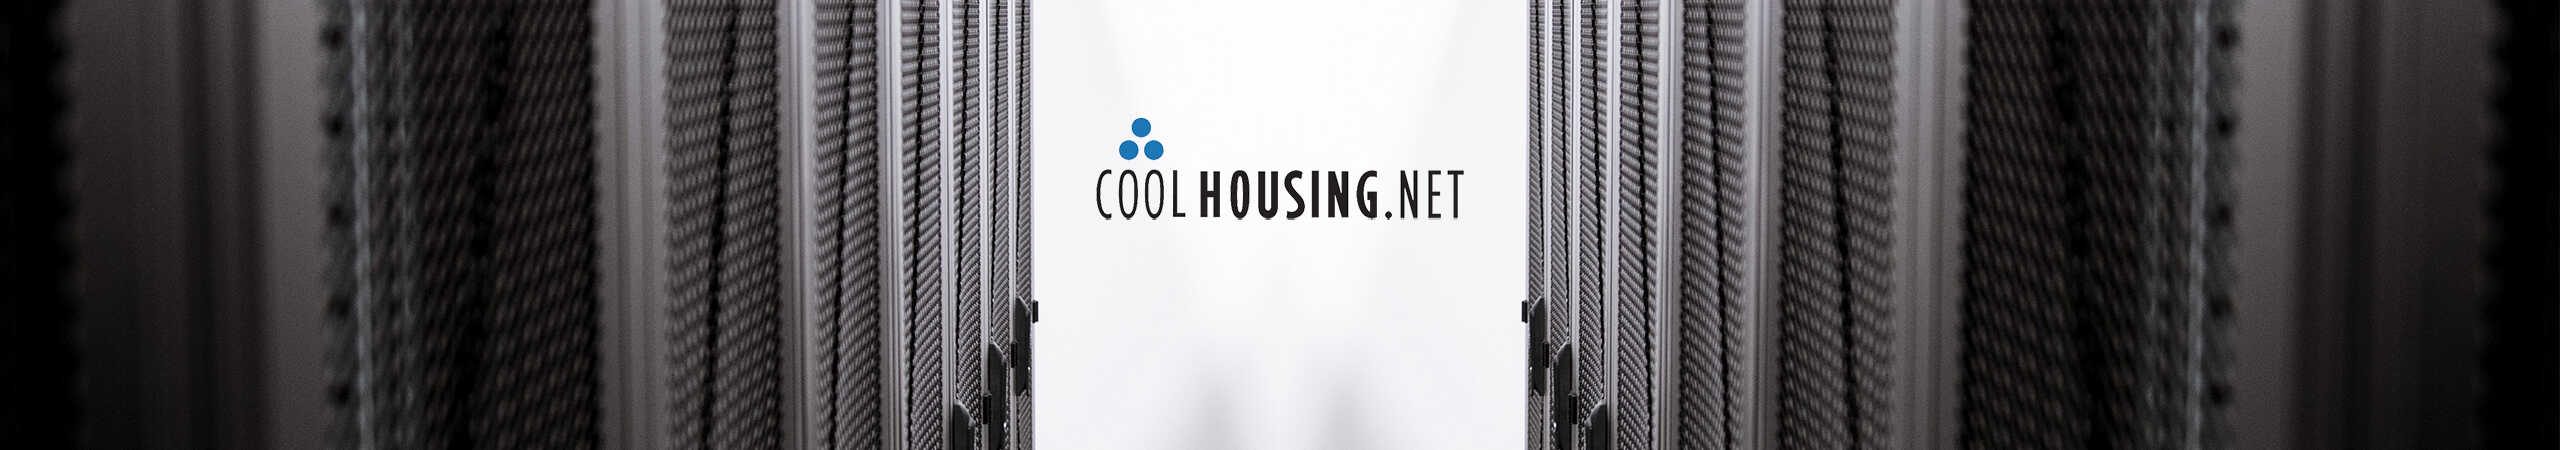 Serverovna a proč Coolhousing